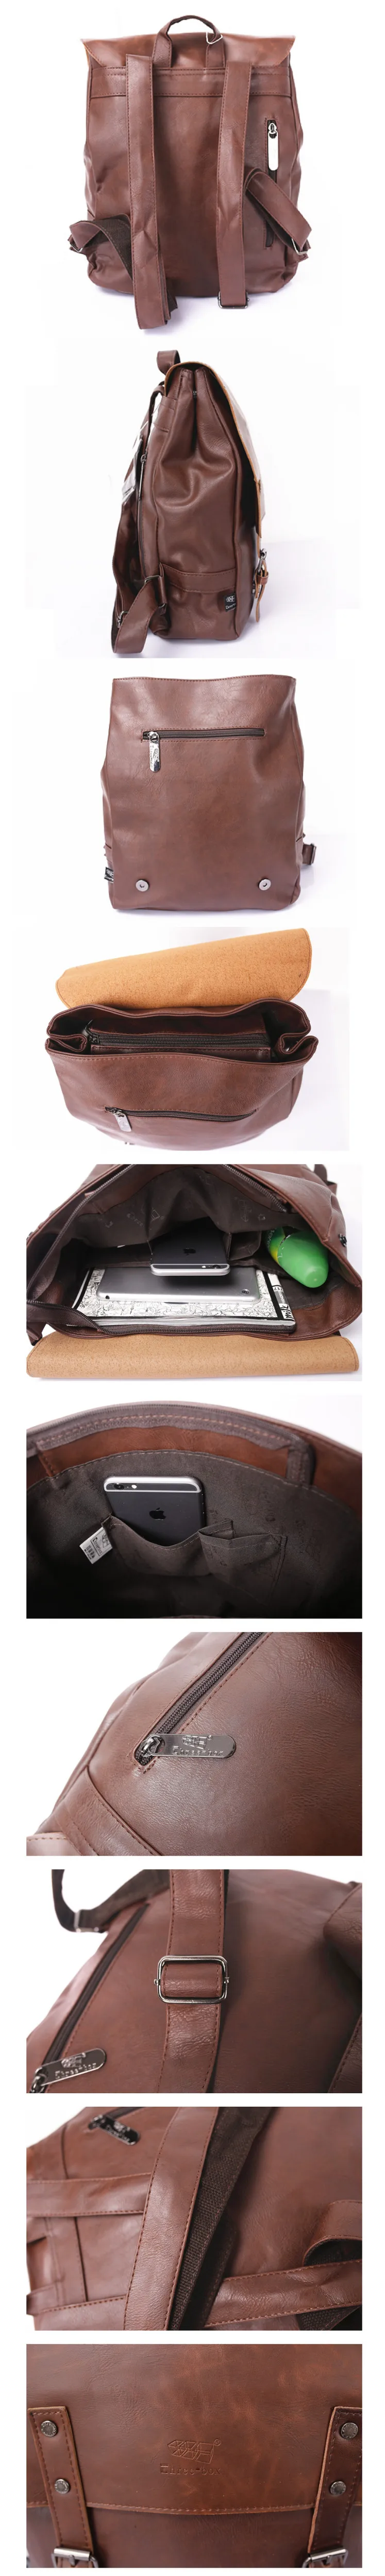 Black PU Leather Backpack School Bag Cute For School Handbag Men Hot Satchel Bags Cover Magnetic Hasp New